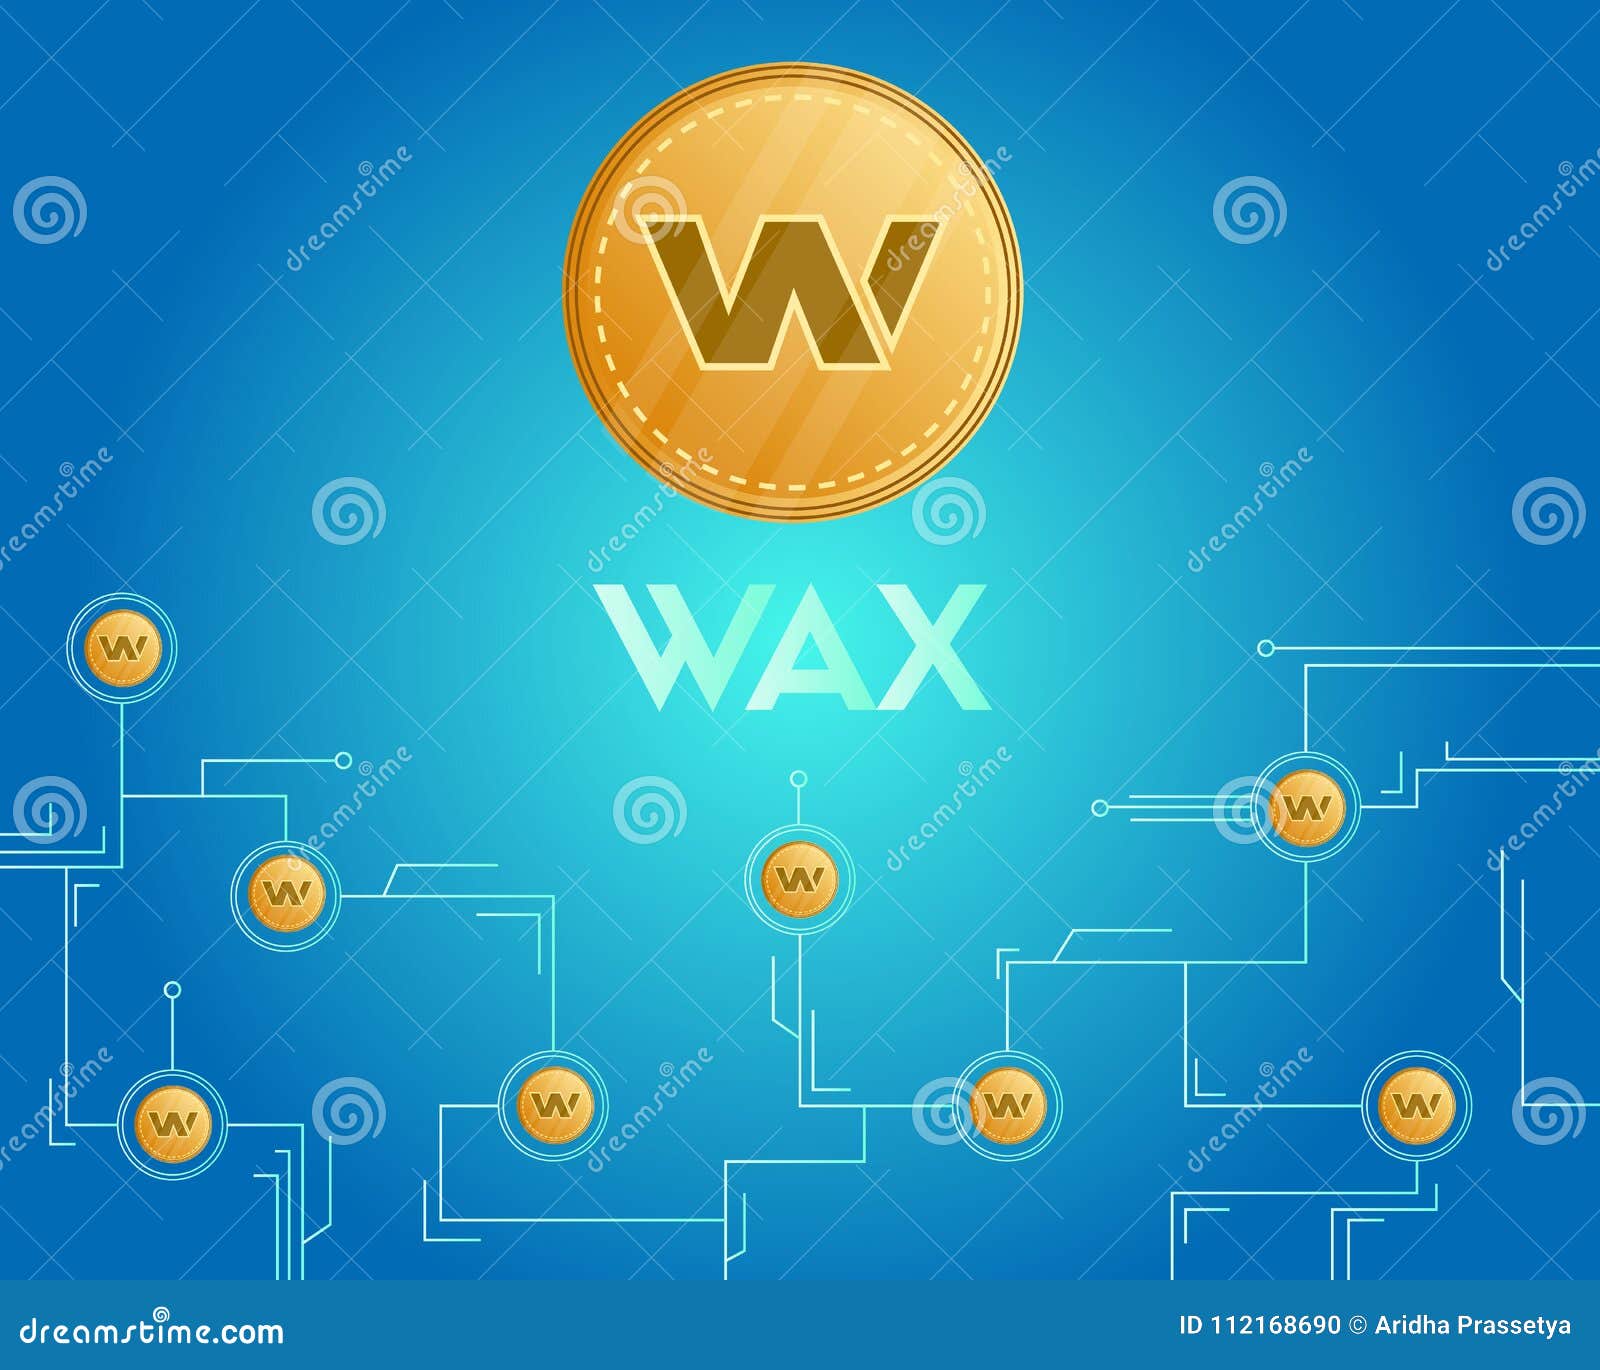 wax cryptocurrency ico